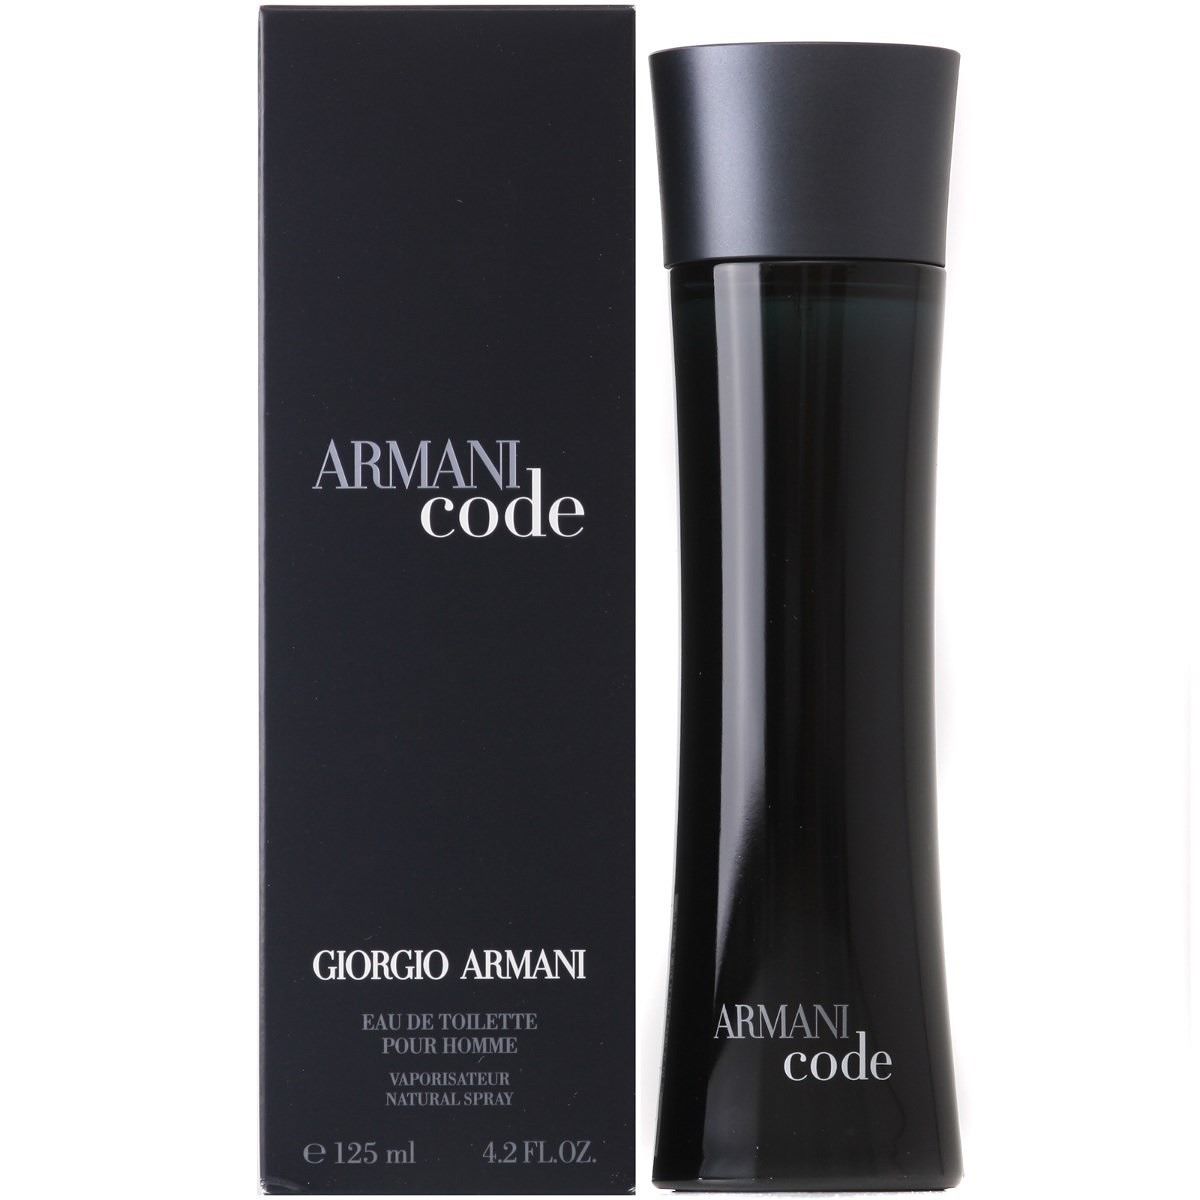 Armani (Giorgio Armani) Armani Code M EDT 125 ml